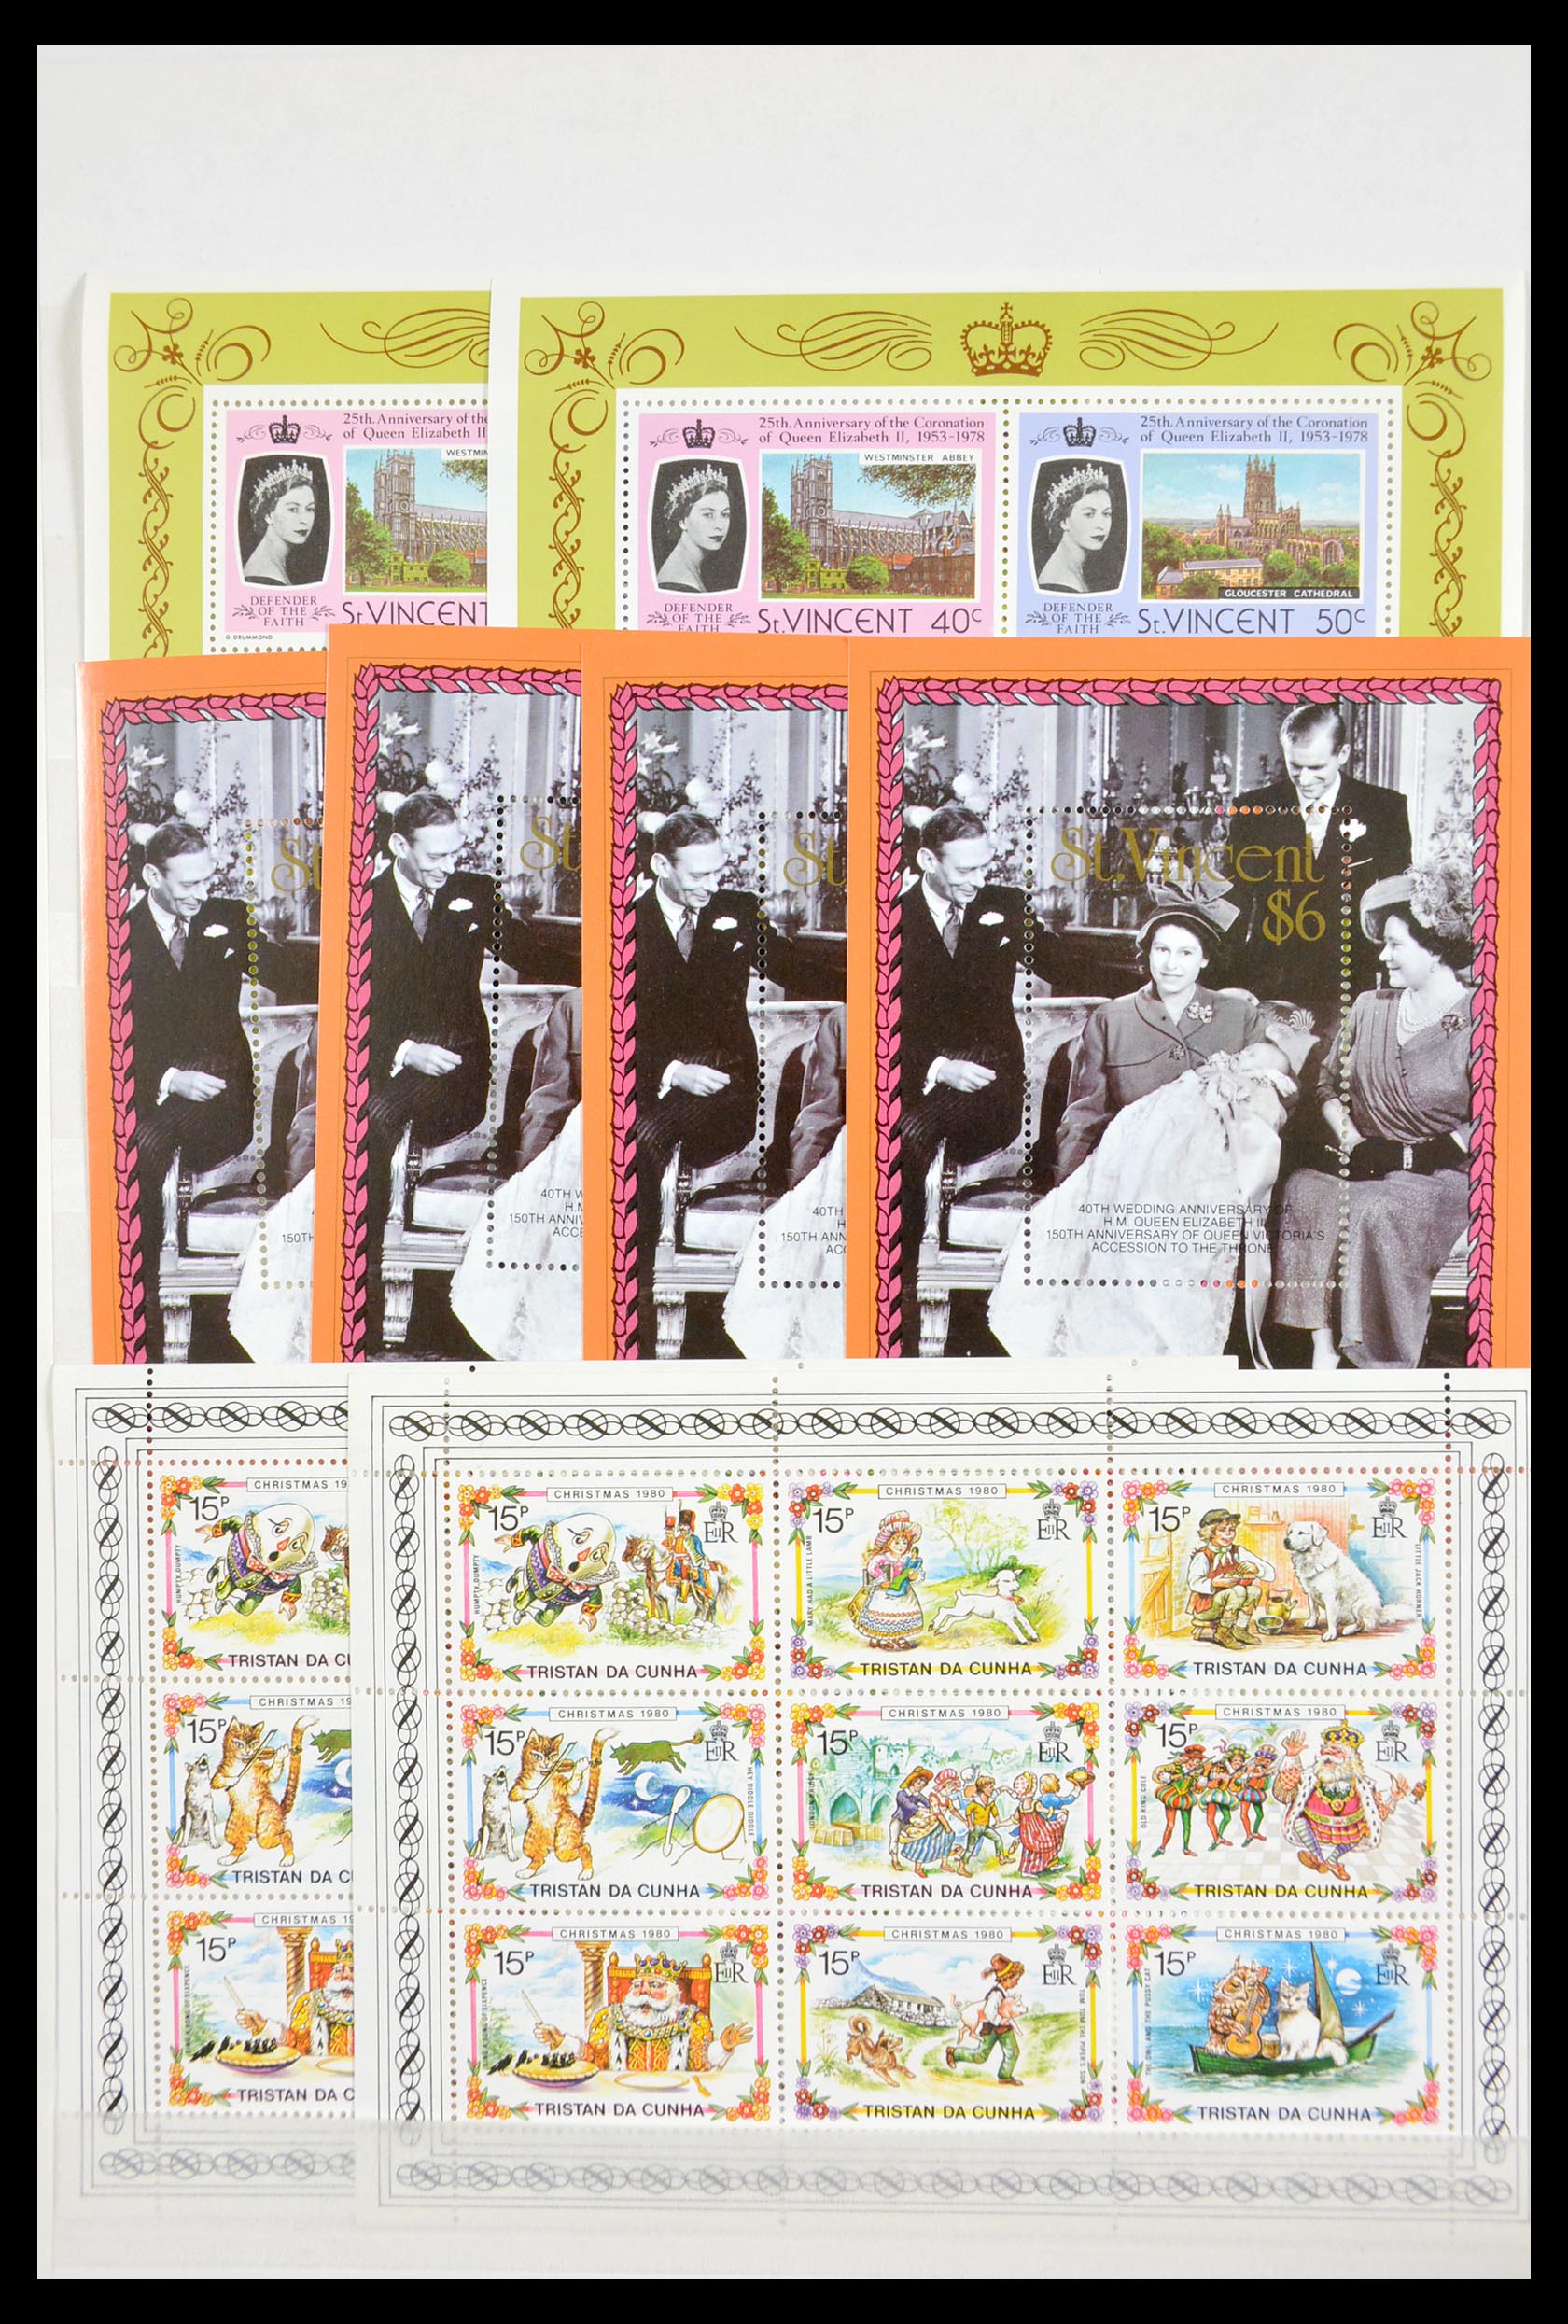 29584 107 - 29584 World souvenir sheets 1980-2011.